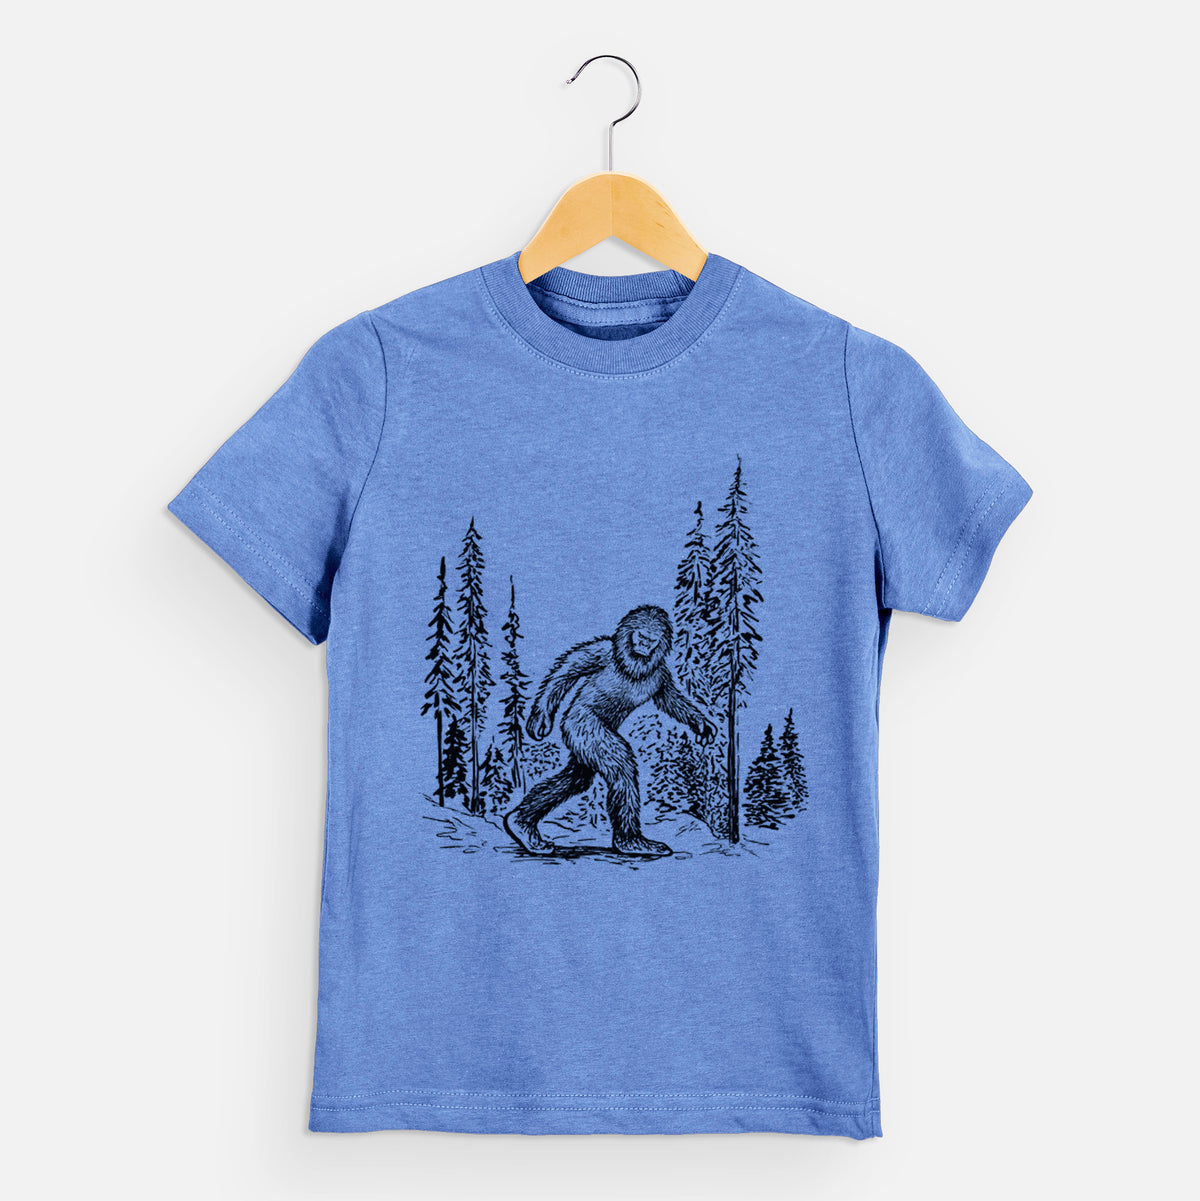 Bigfoot in the Woods - Kids Shirt